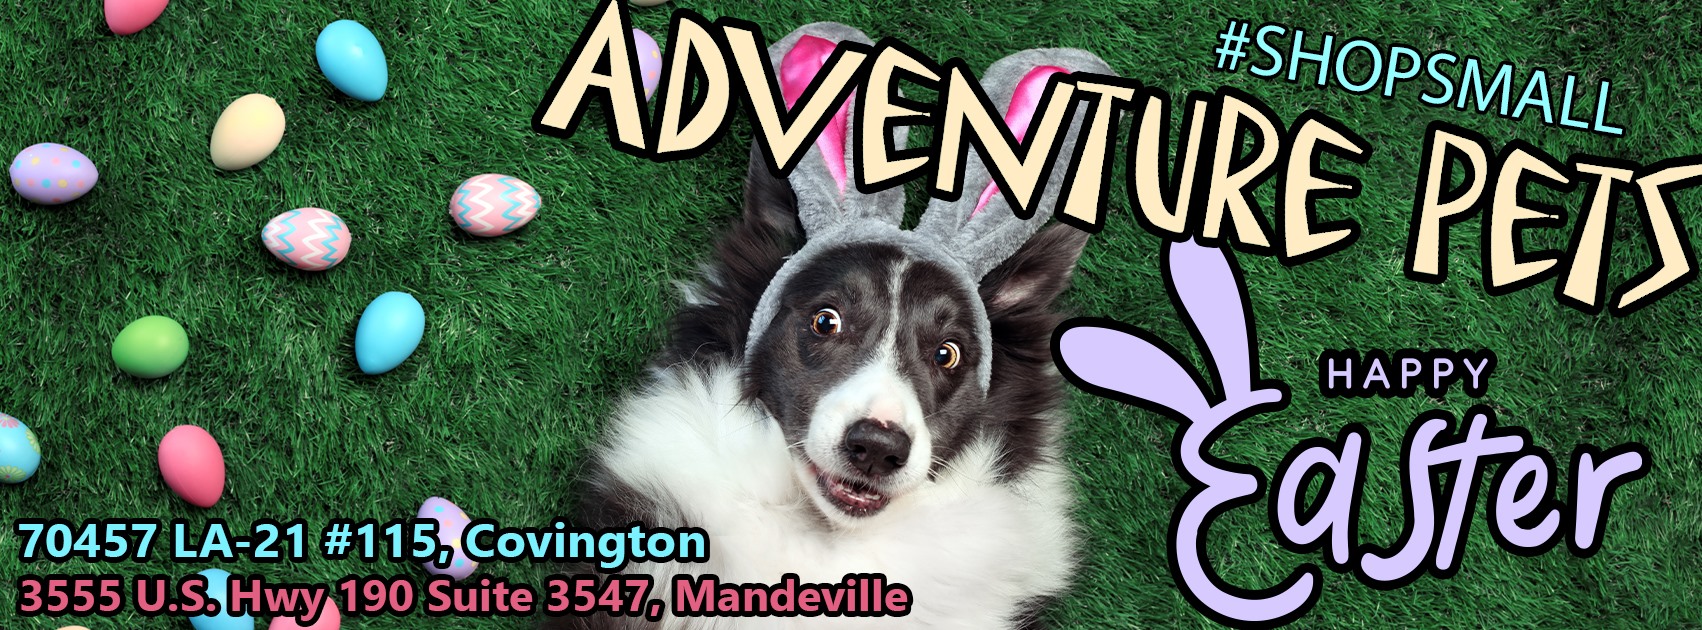 Adventure Pets Covington